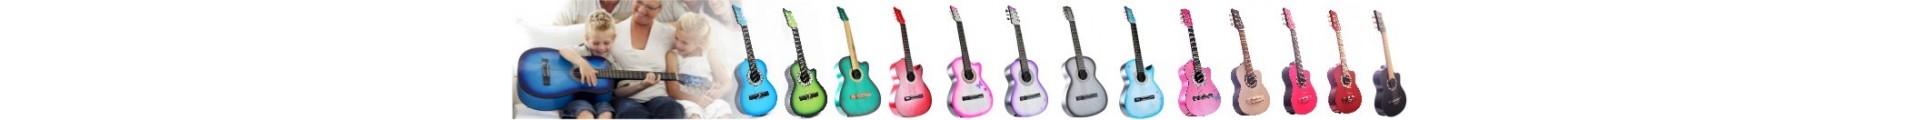 Guitarras Infantiles & Junior